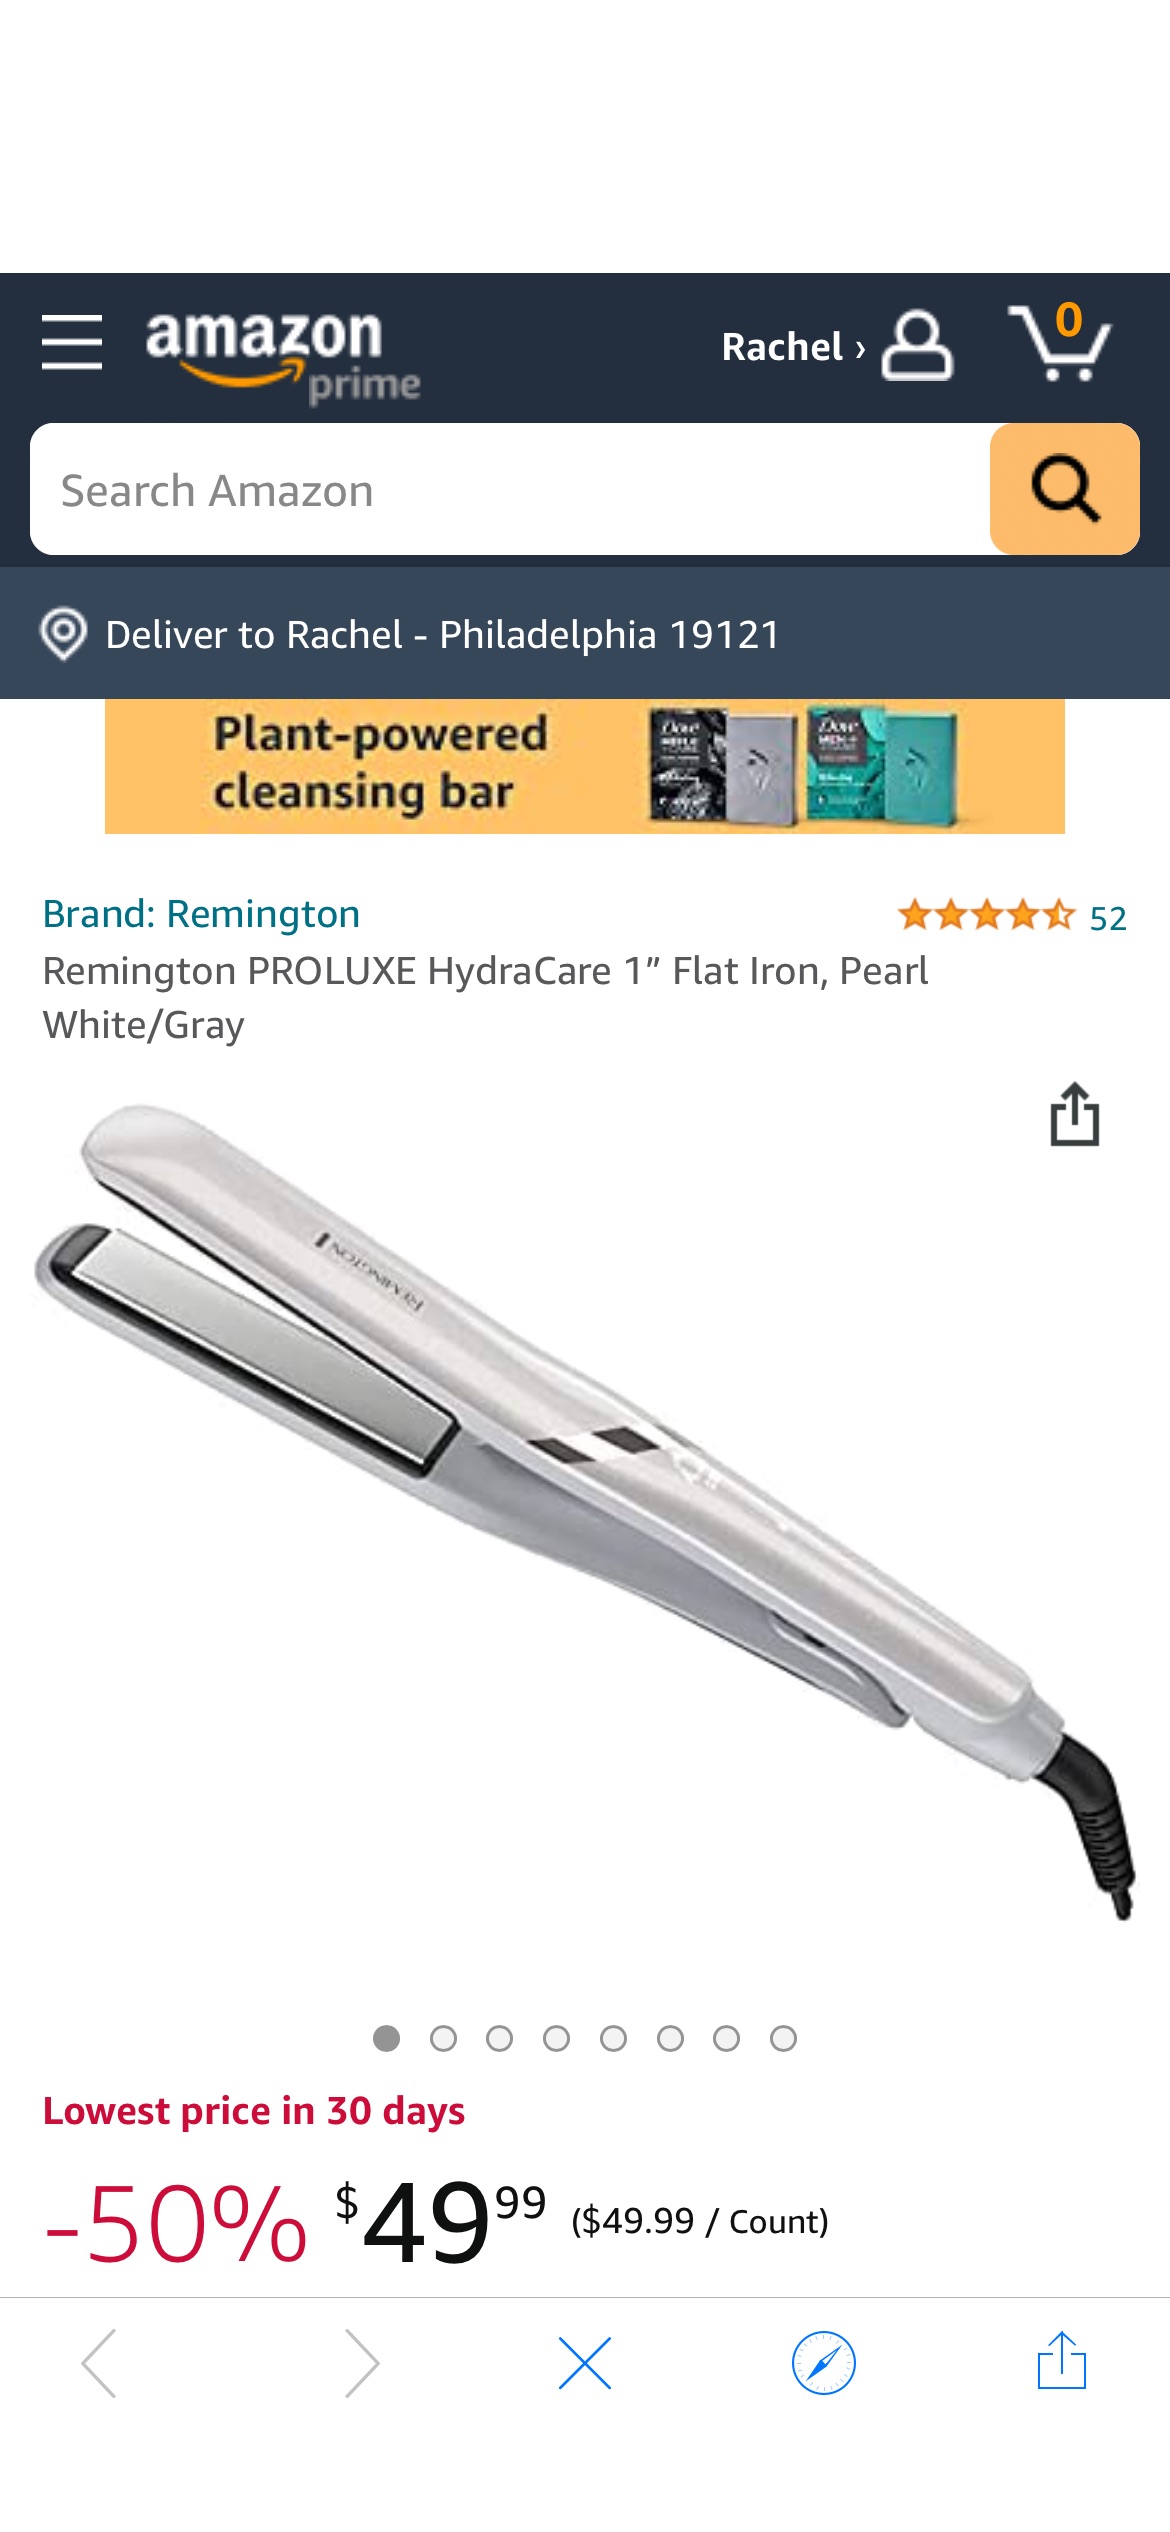 Amazon.com : Remington PROLUXE HydraCare 1” Flat Iron, Pearl White/Gray : Beauty & Personal Care